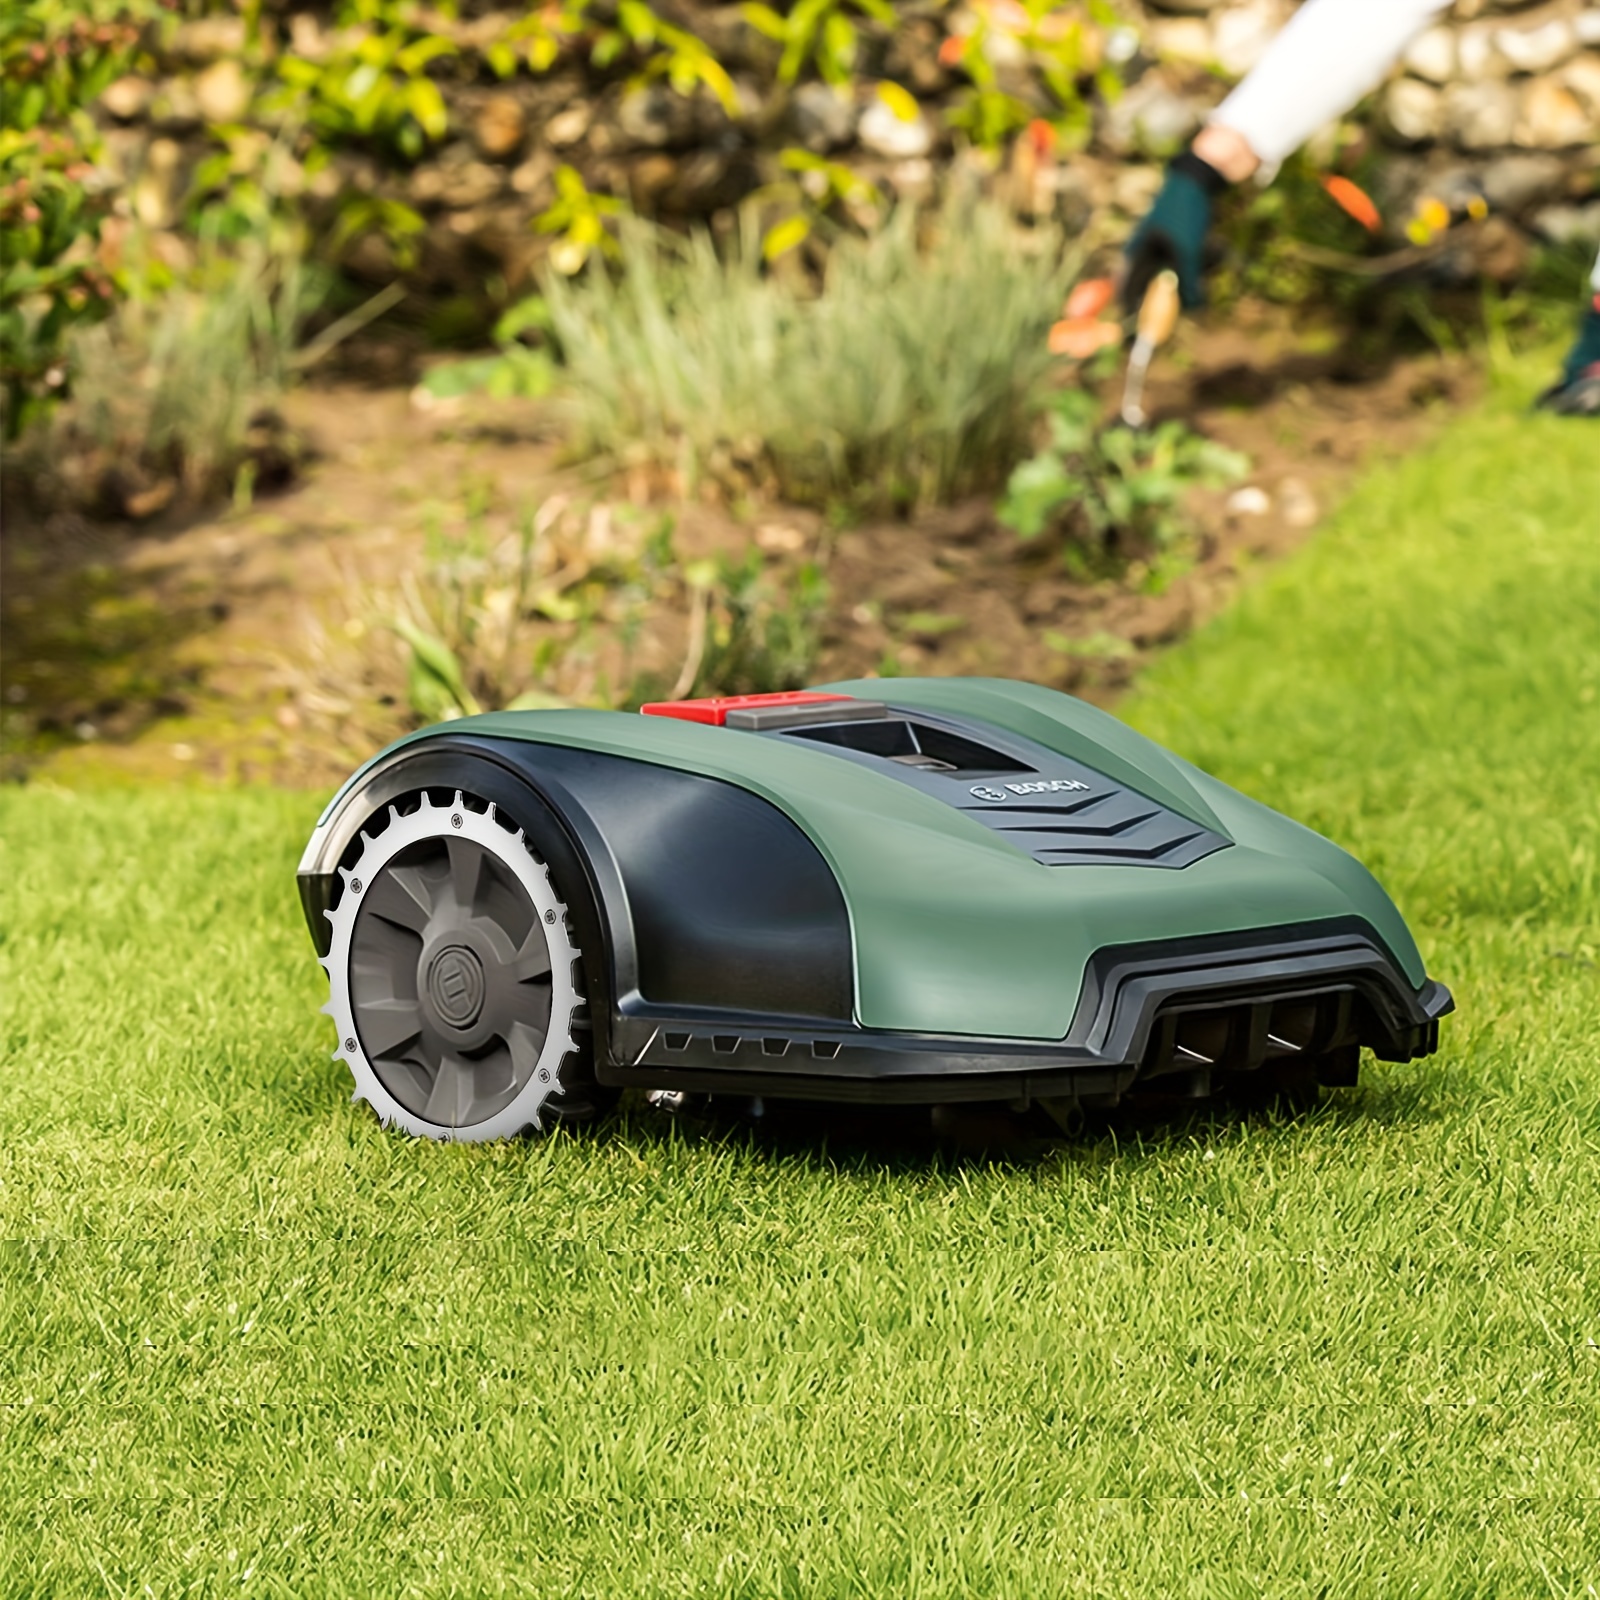 Buy Bosch Home and Garden INDEGO S500 Robotic lawn mower Suitable